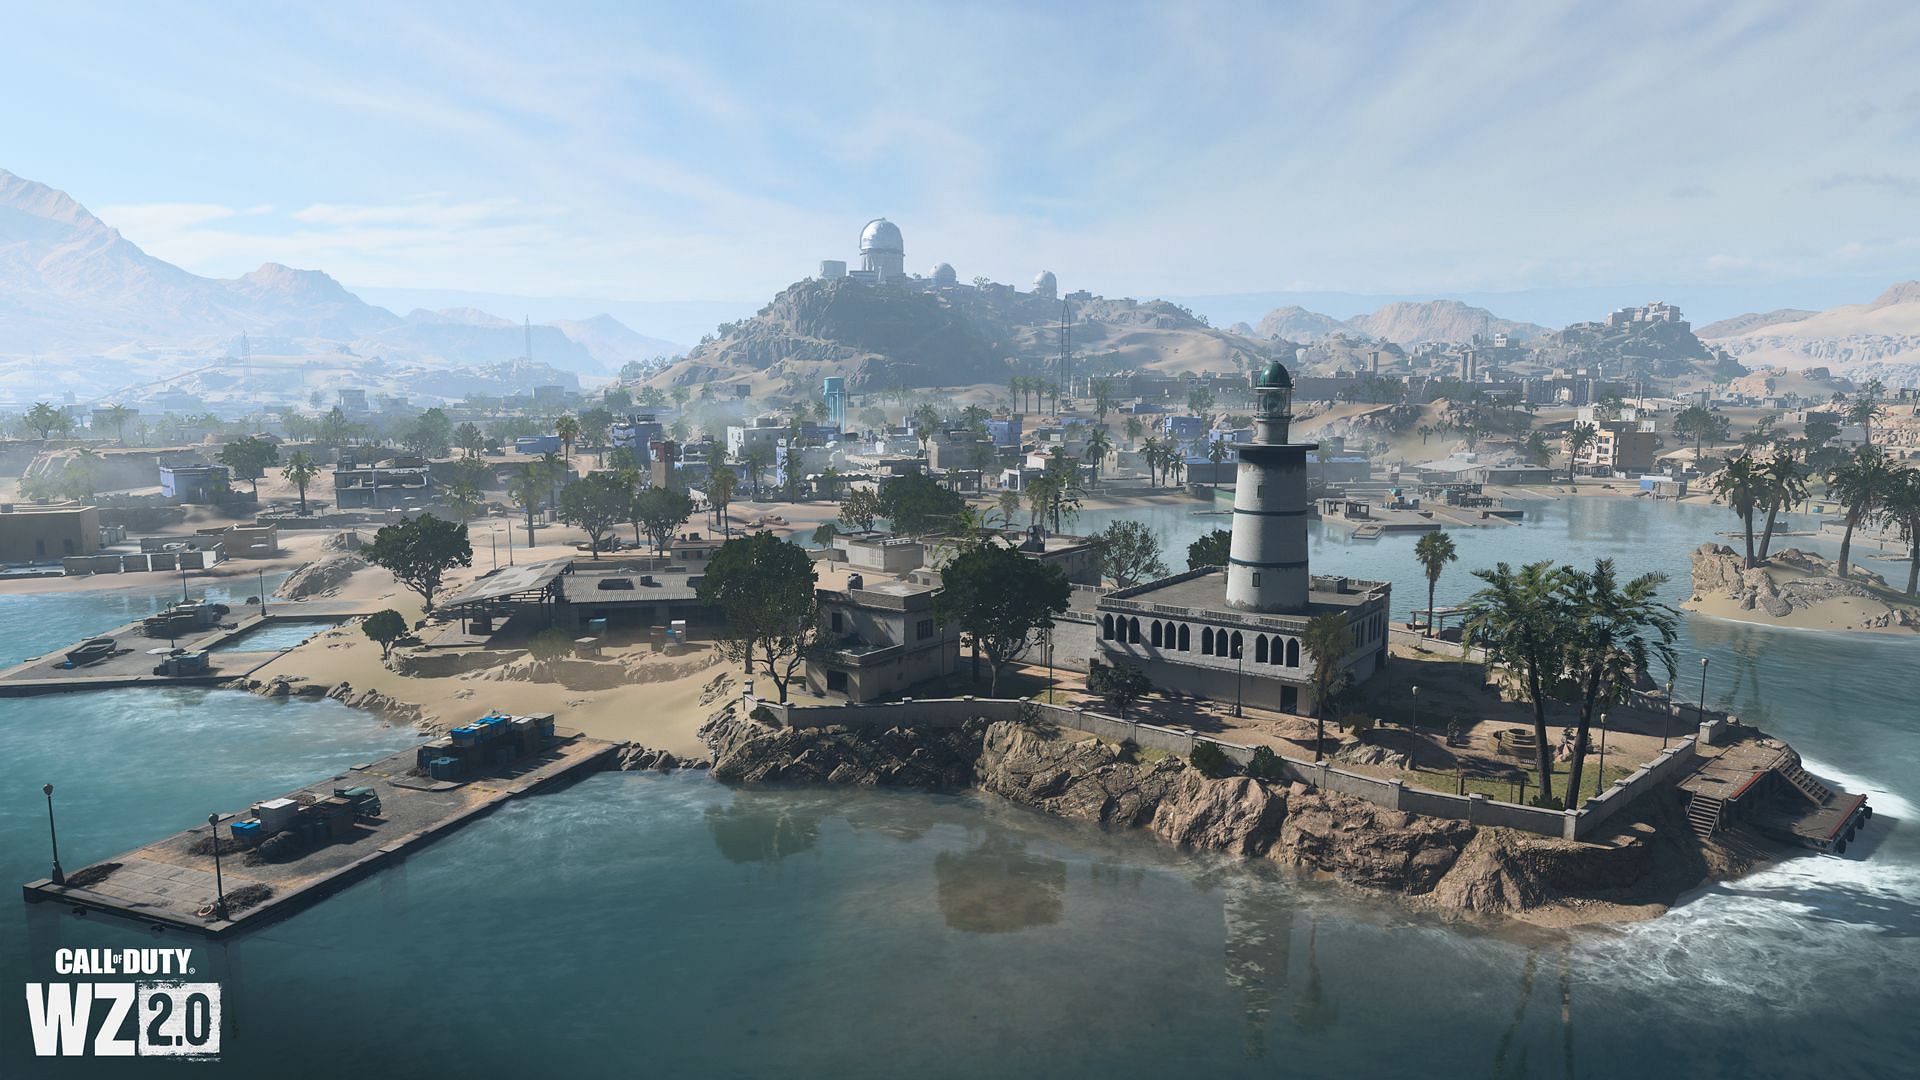 Sariff Bay in Call of Duty: Warzone (Image via callofduty.com)